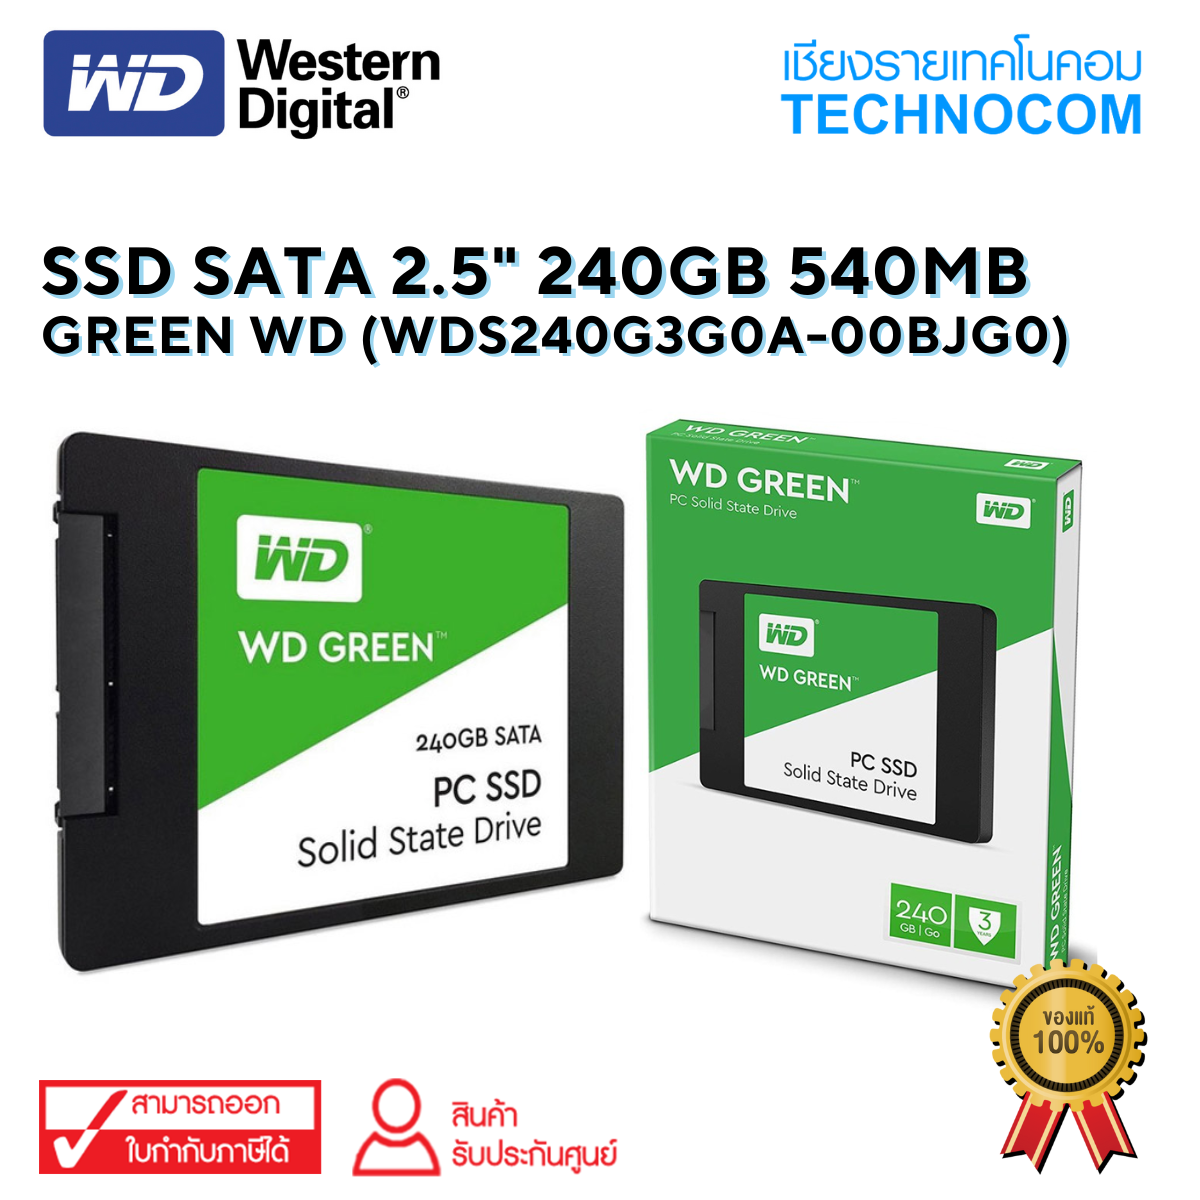 Tom Audreath evne nitrogen SSD SATA 2.5" 240GB 540MB GREEN WD (WDS240G3G0A-00BJG0) - technocom